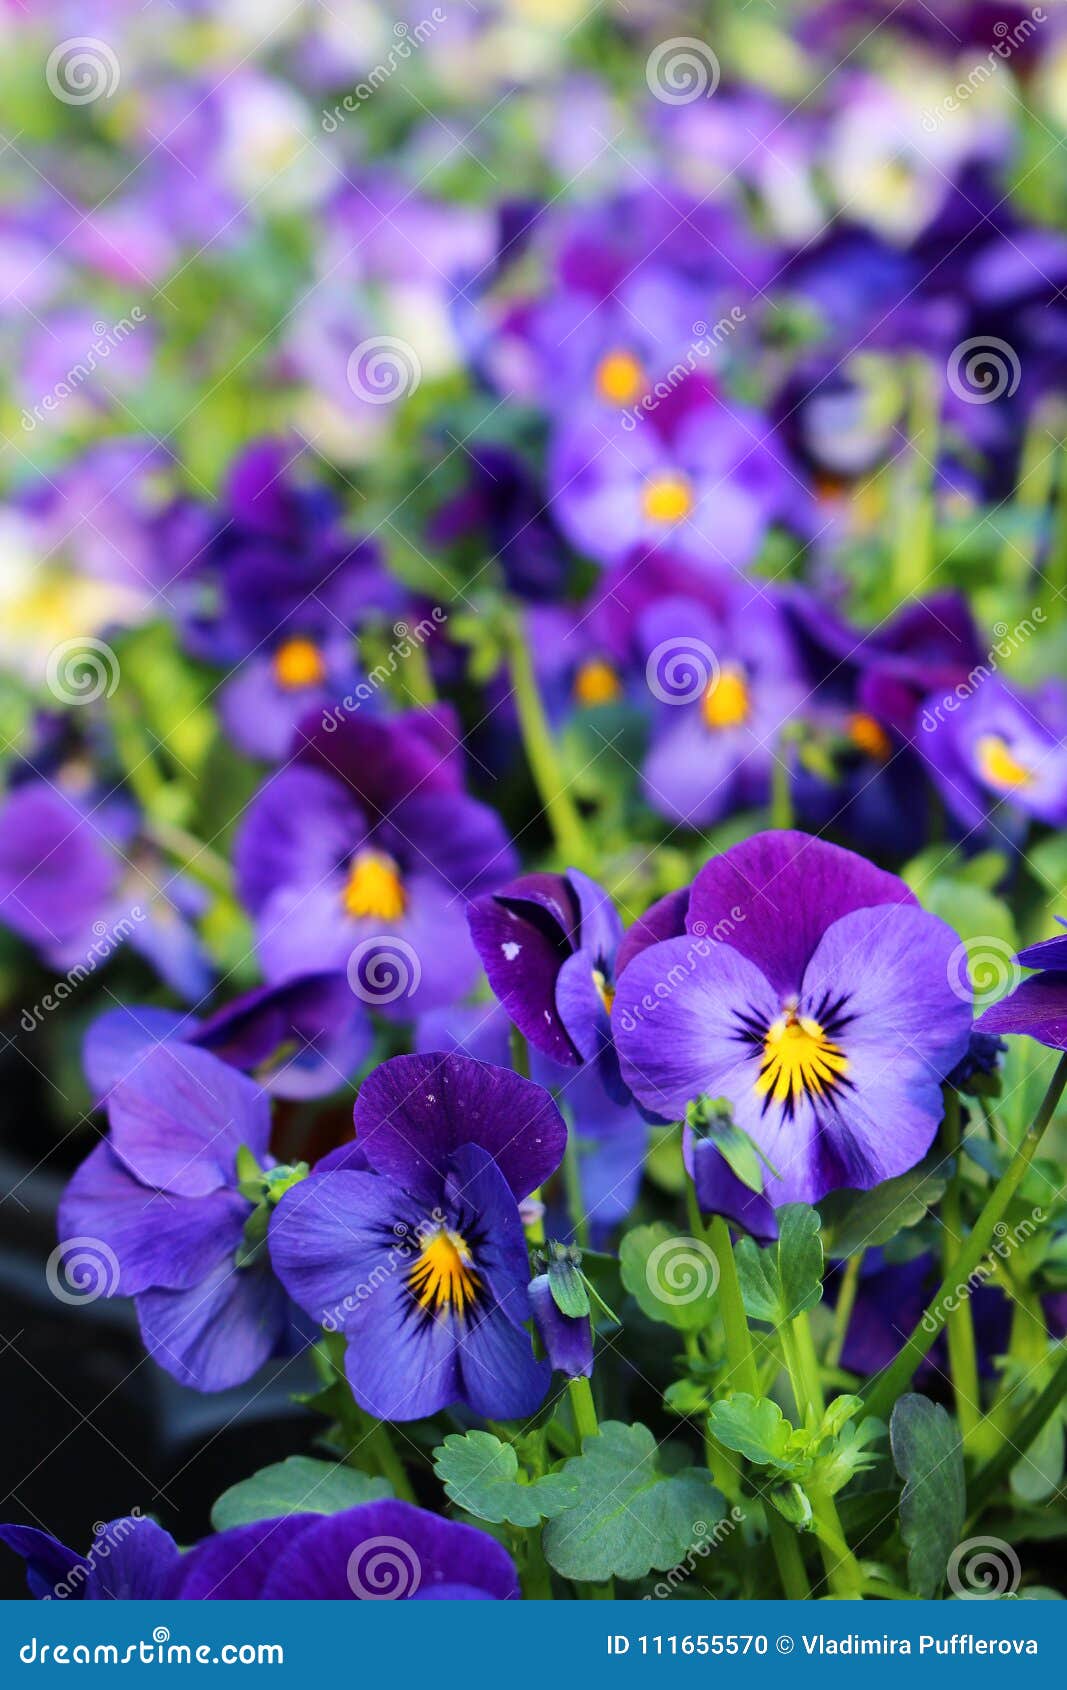 viola sp. - favourite garden flower at a floristÃÂ´s